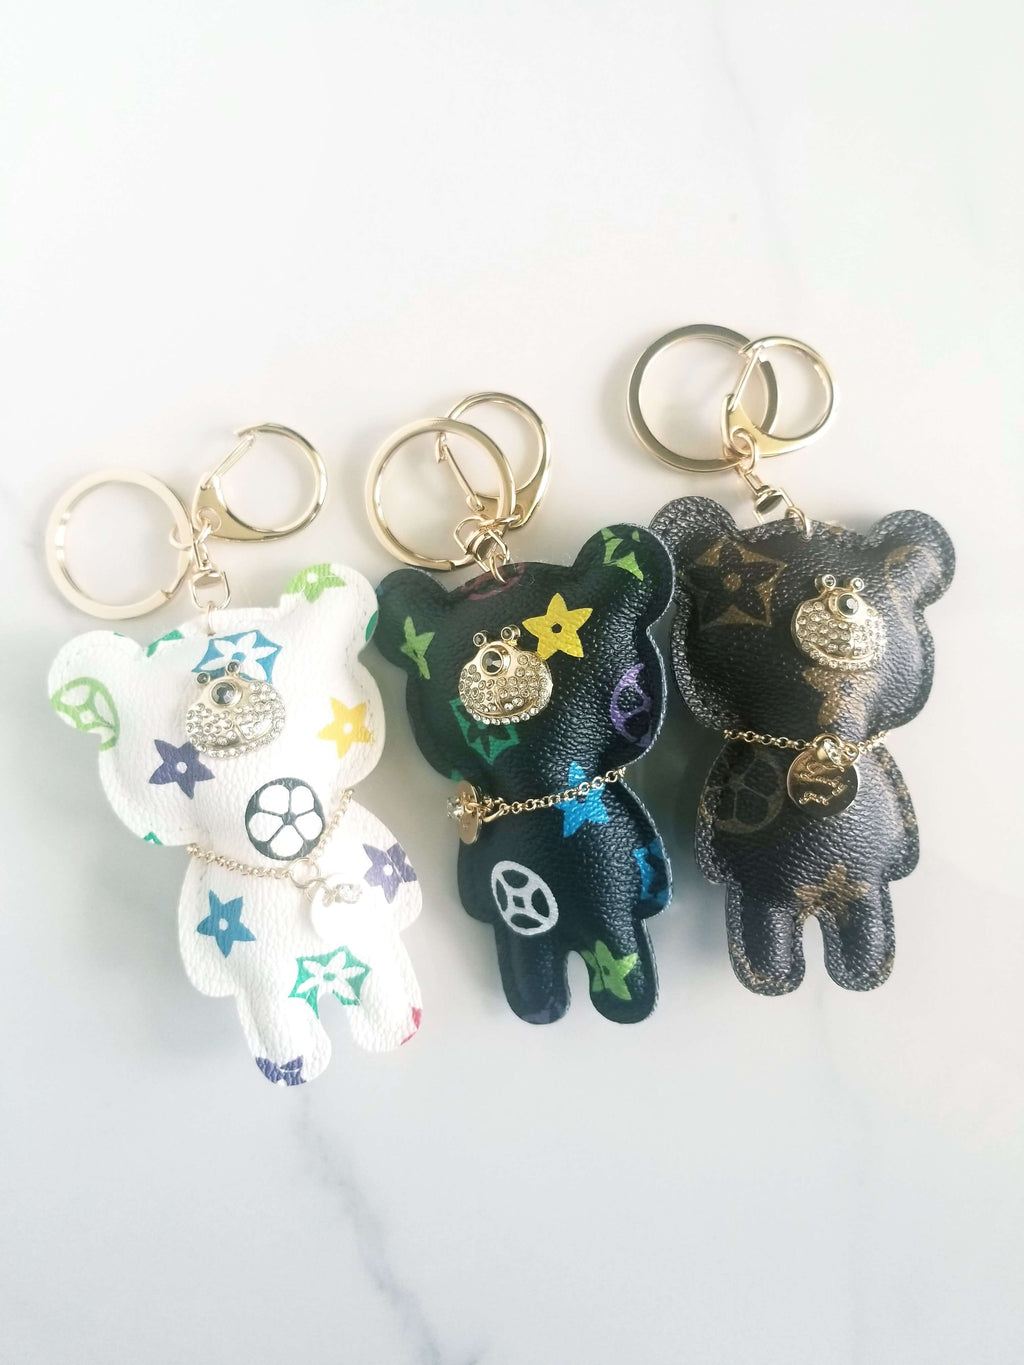  Lv Teddy Bear Keychain